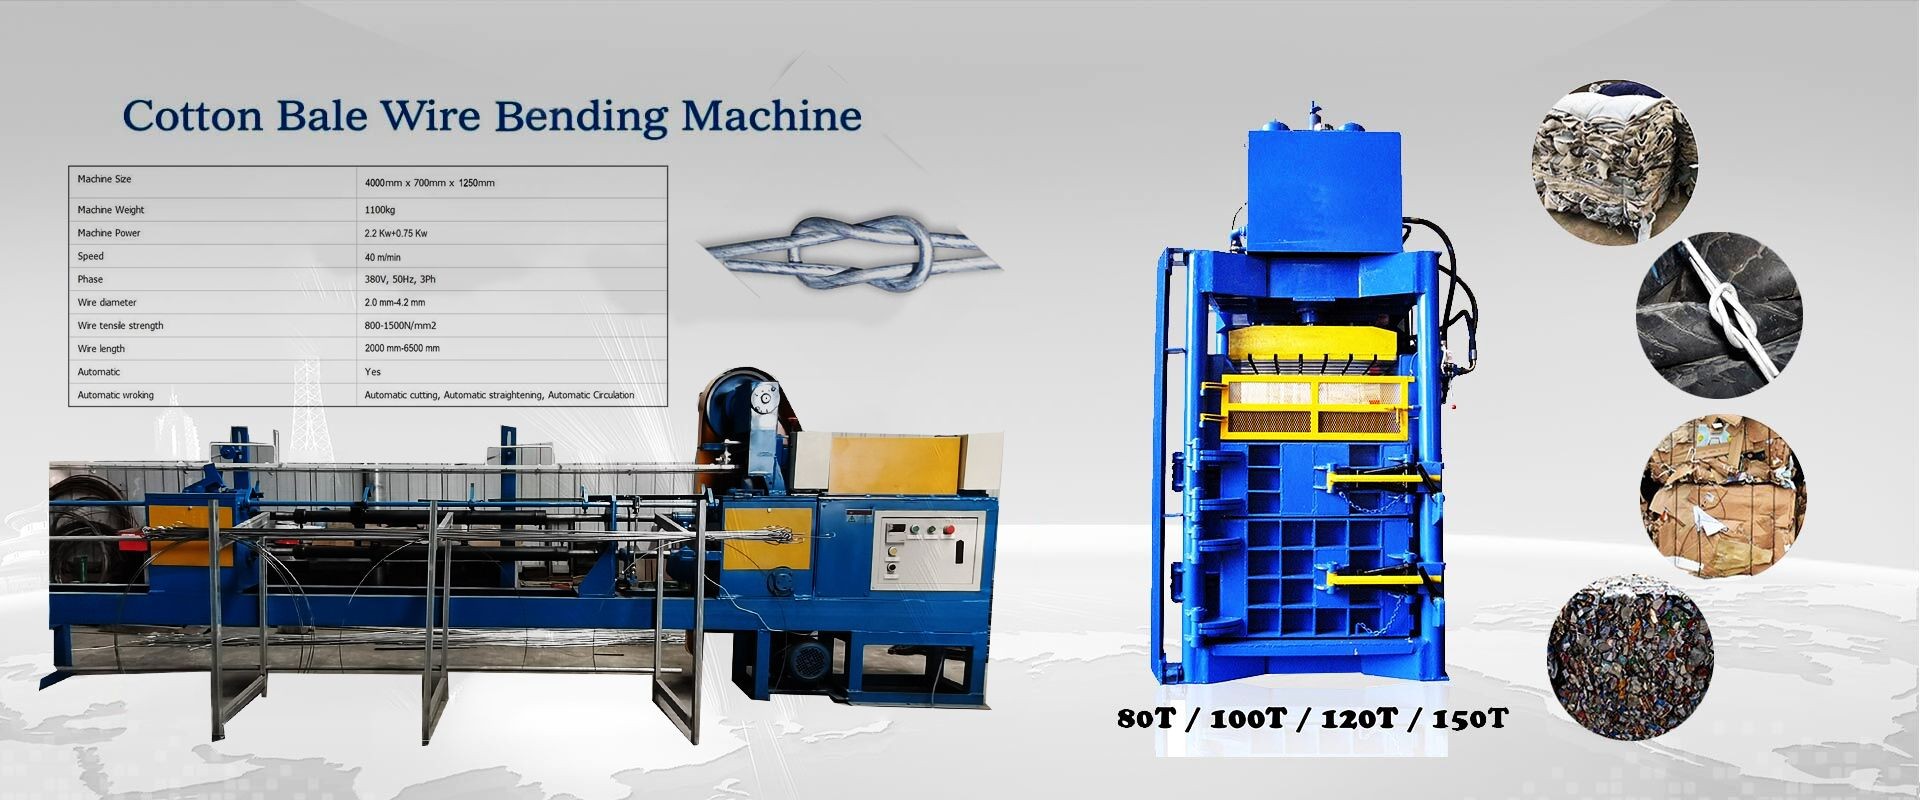 HEBEI DINGSHENG MACHINE MANUFACTURE CO., LTD